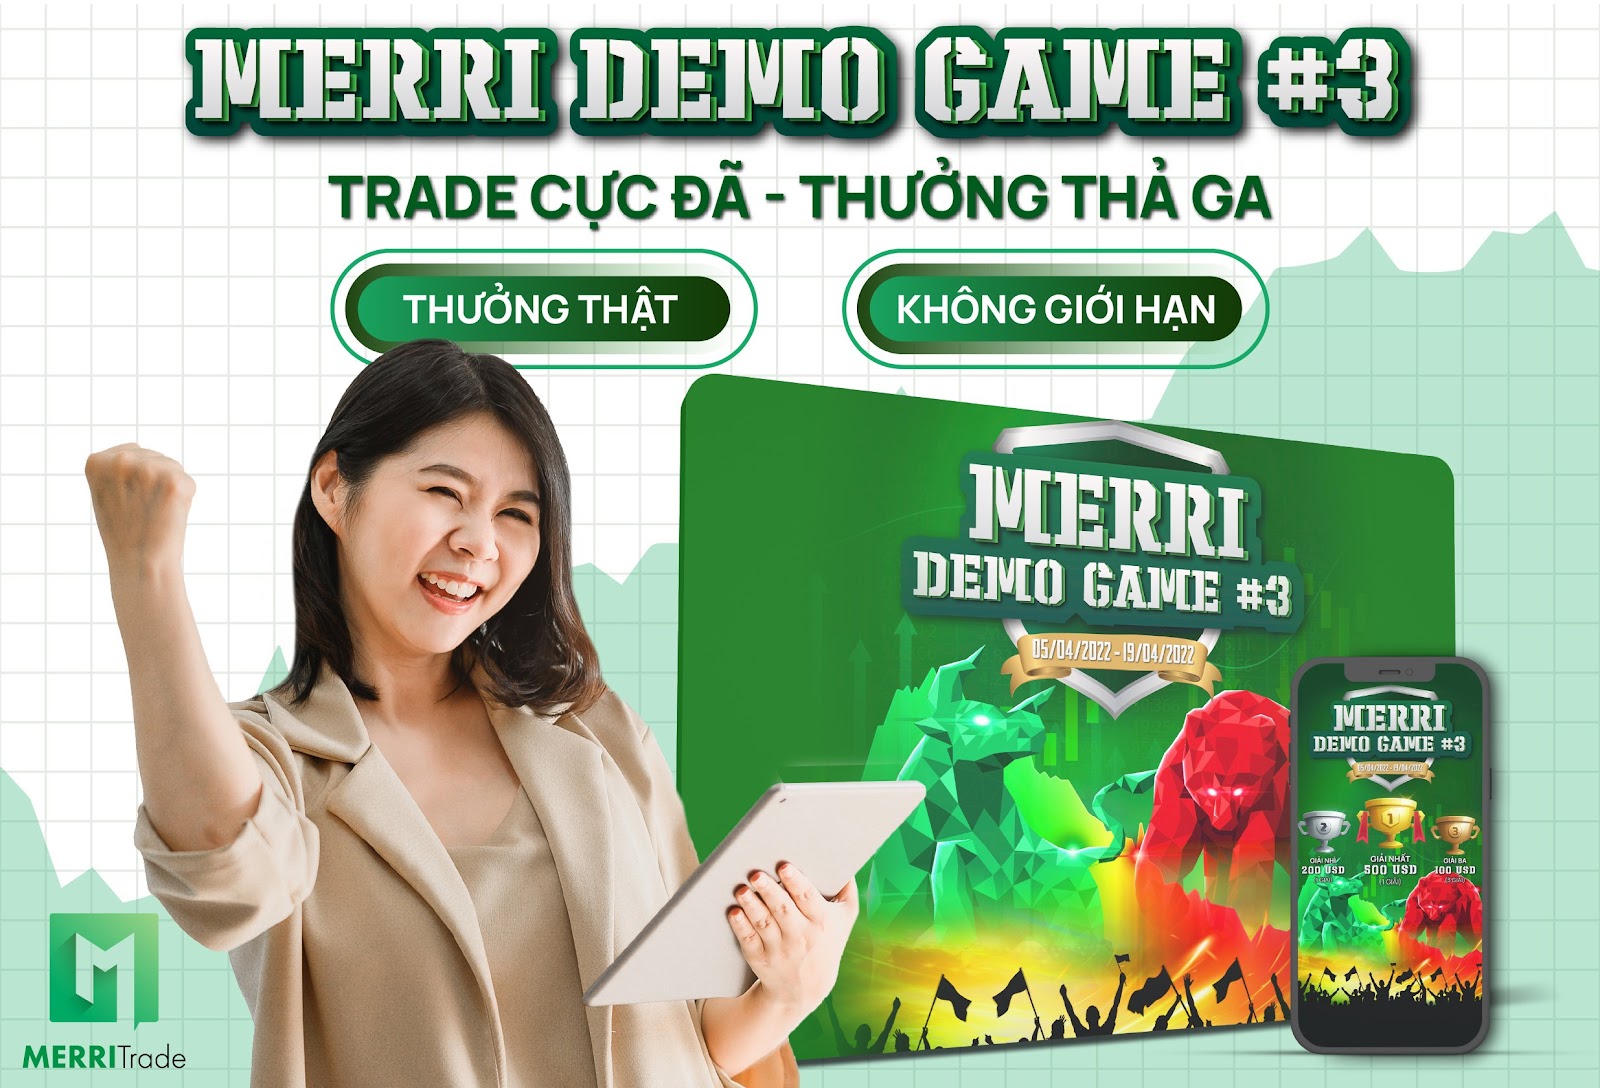 Merri Demo Game #3 thu hút nhiều trader Việt Nam